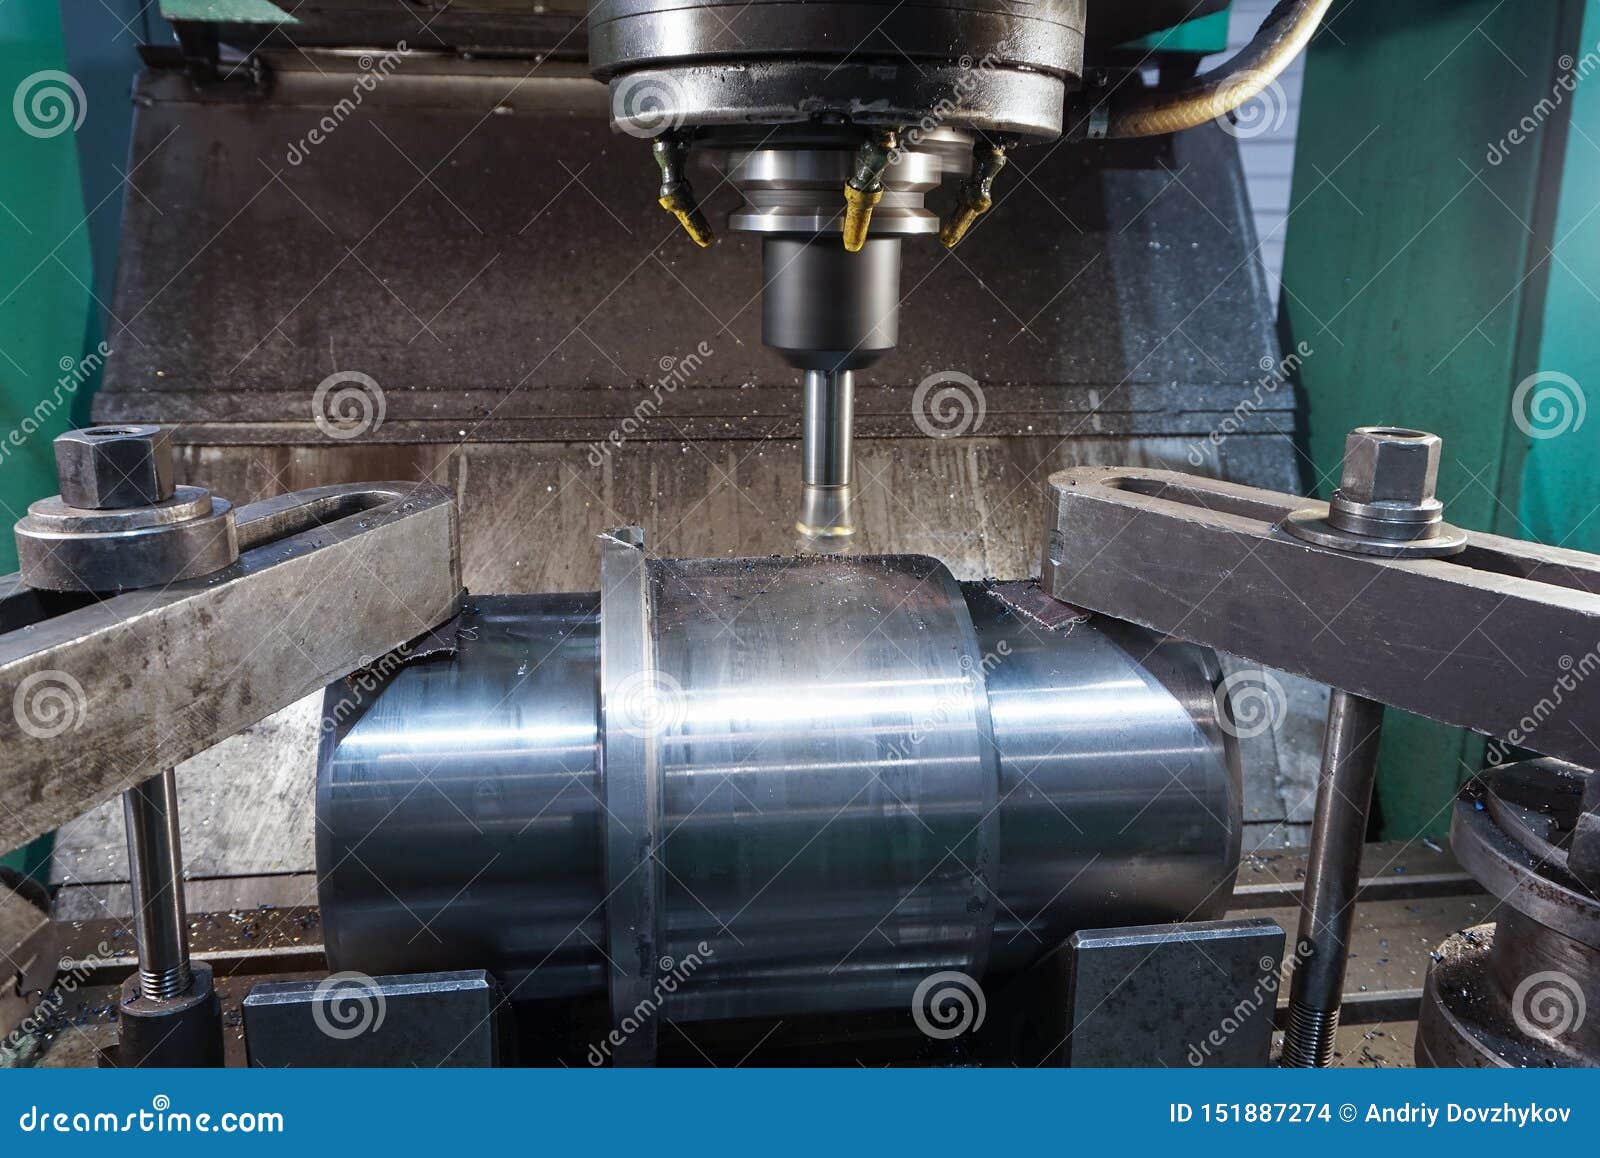 milling keyway shaft on the cnc machine